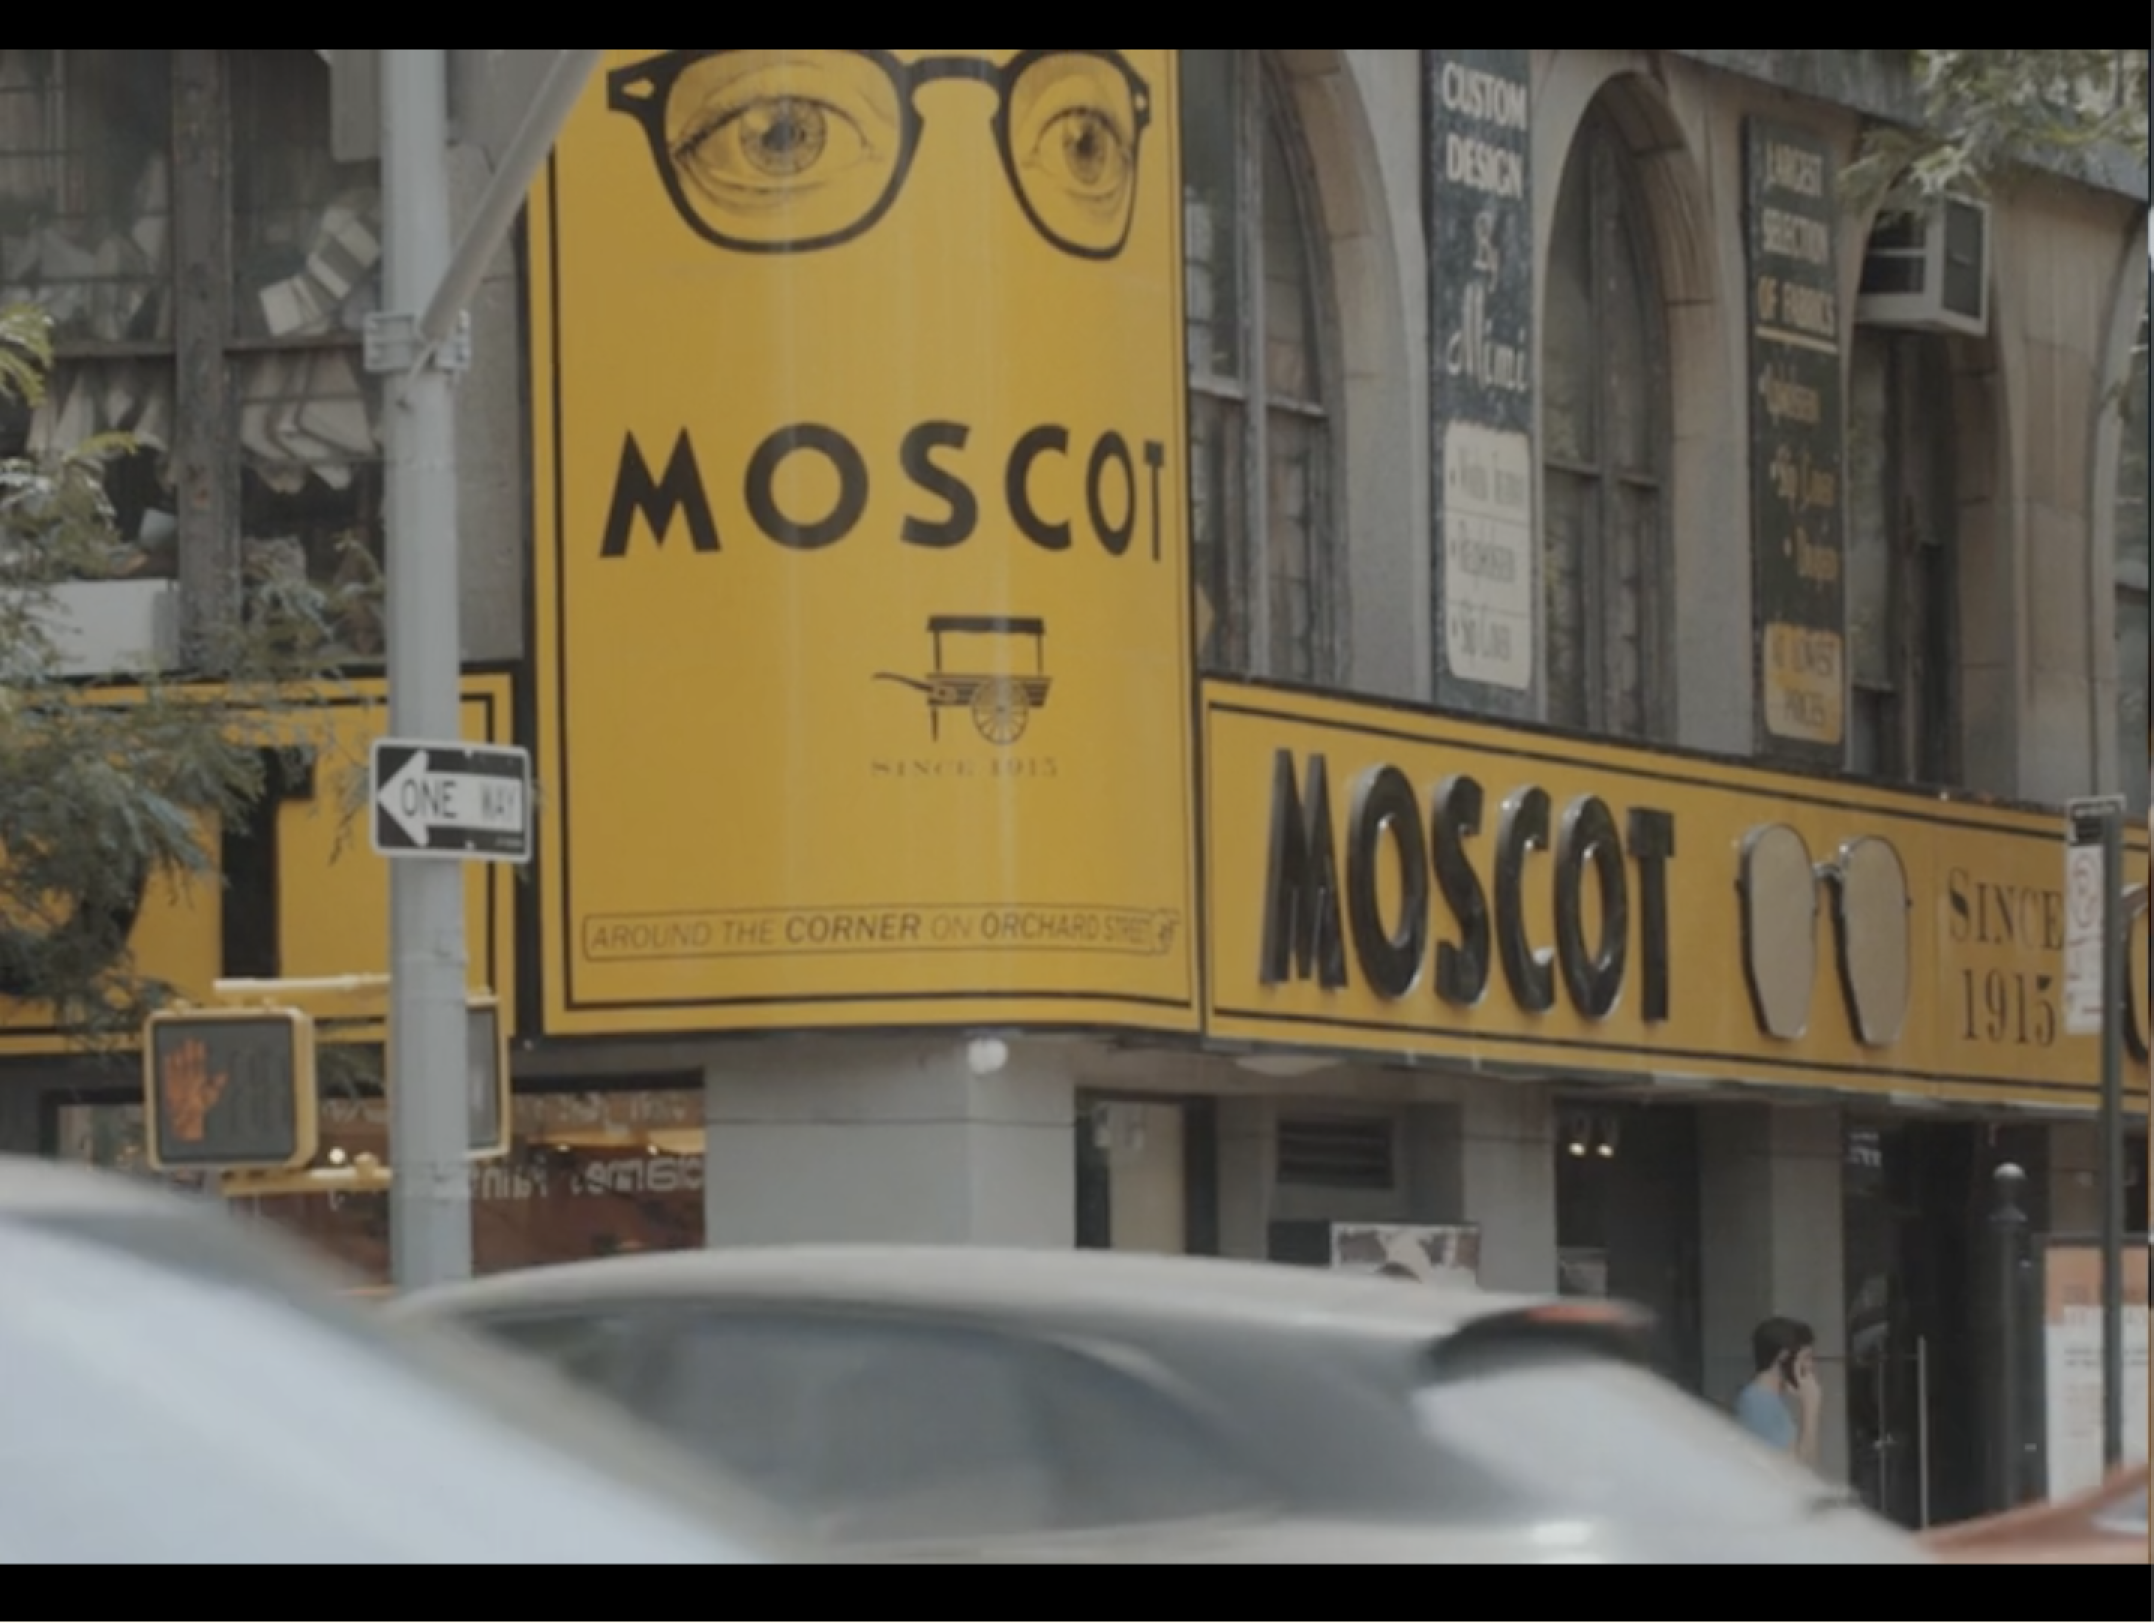 The MOSCOT corner billboard